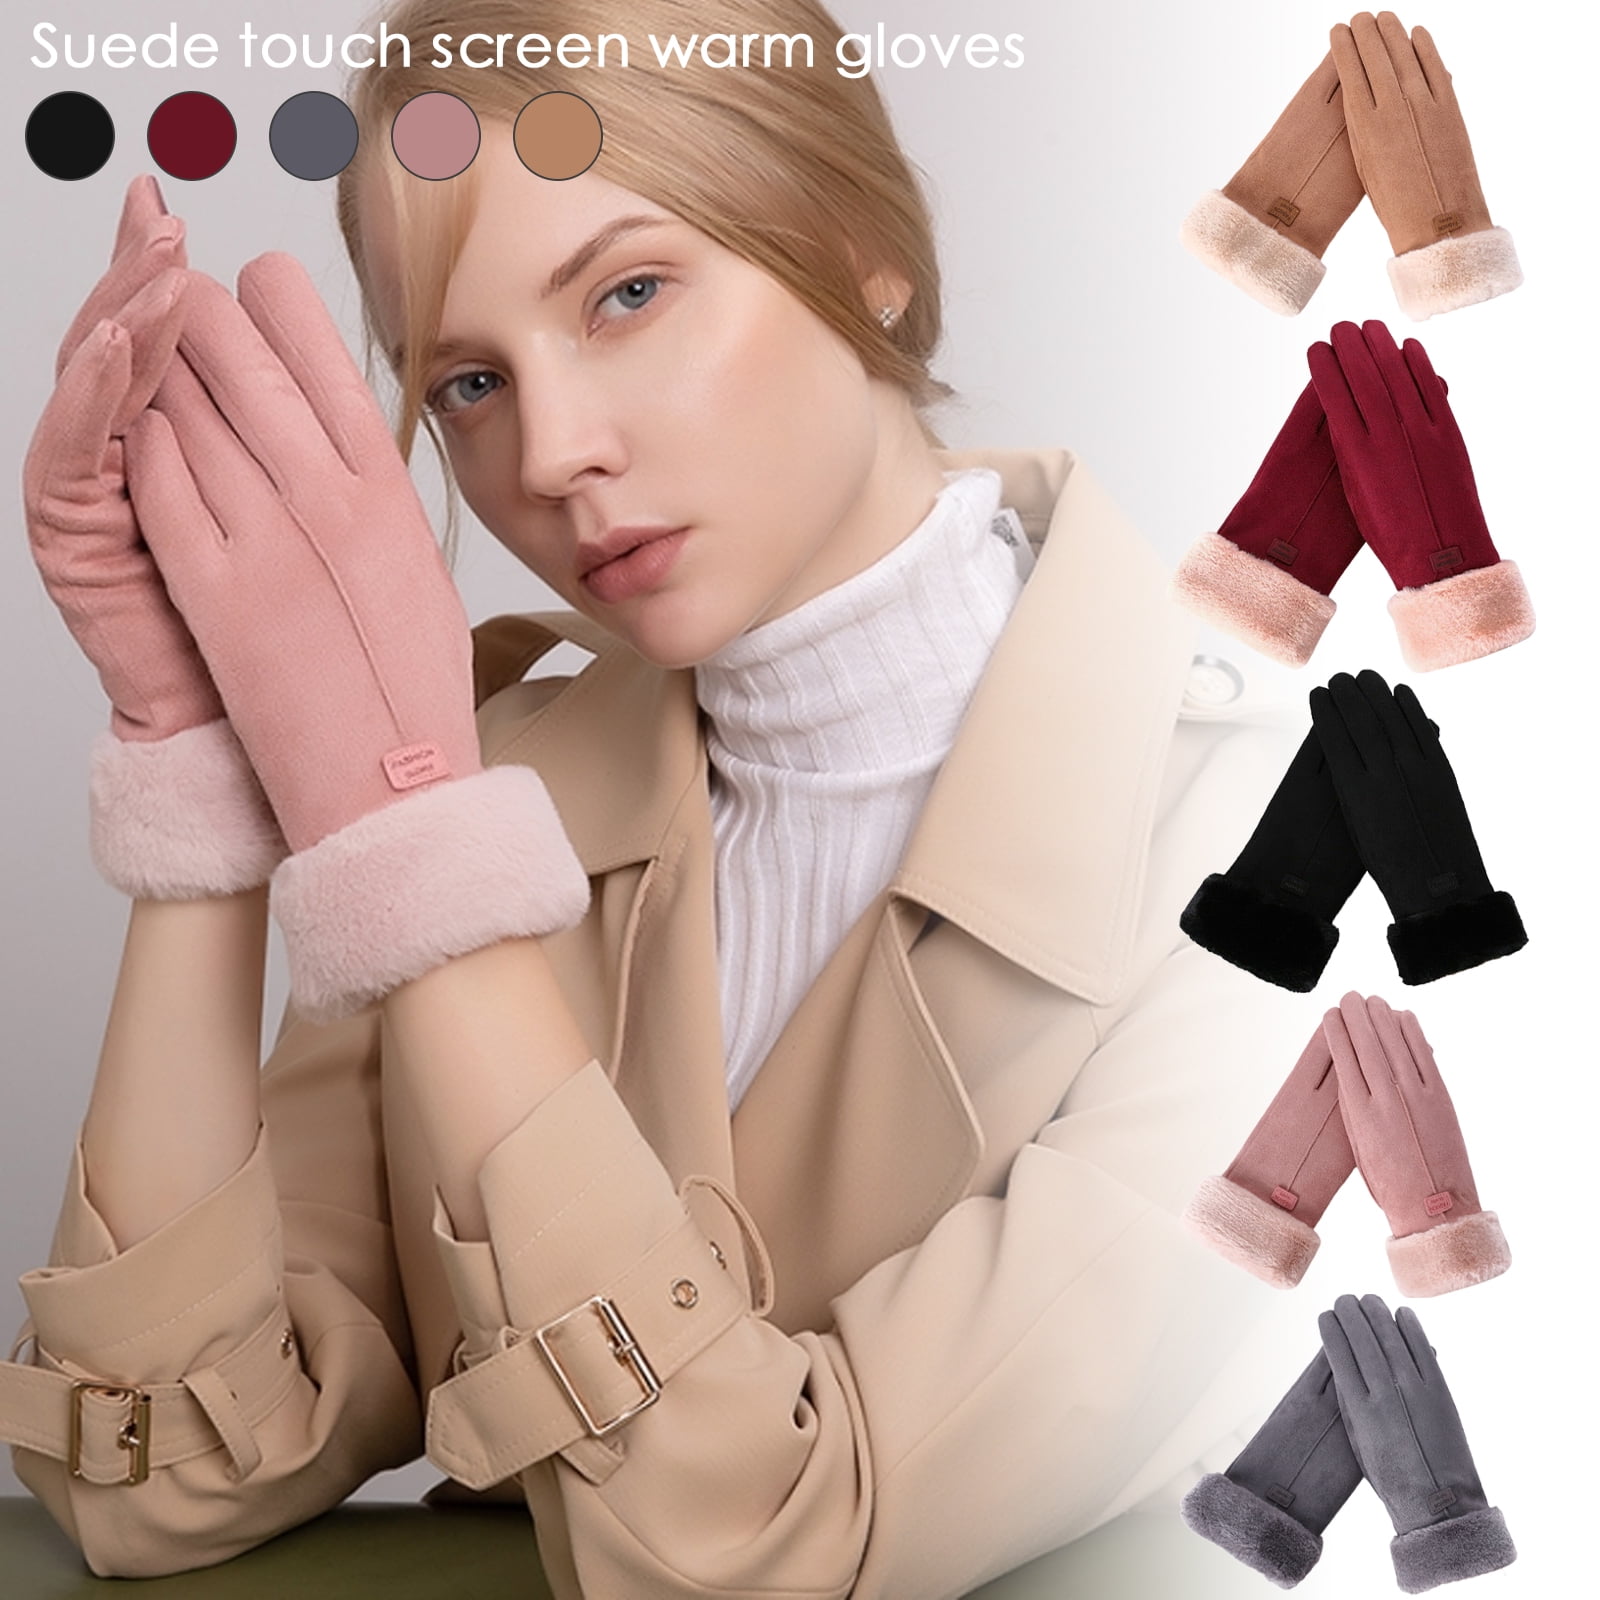 New Women Winter Warm Touch Screen Riding Drove Glove Women Gloves Mittens Gifts 